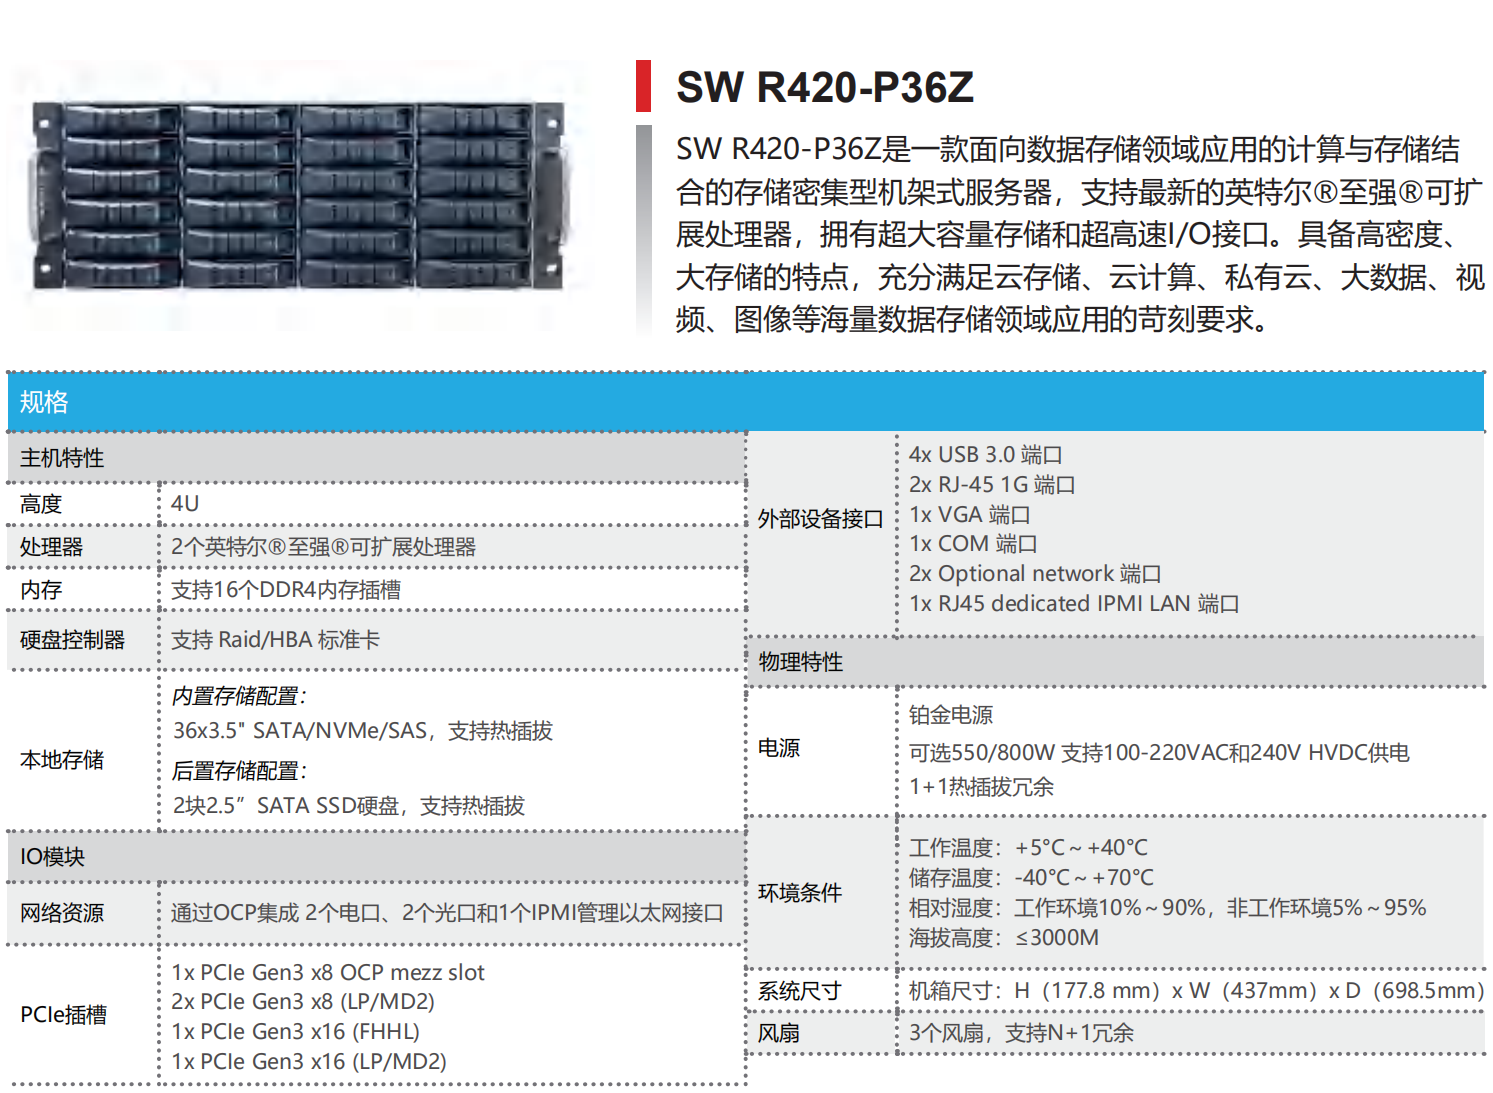 INTEL 平台存储服务器—SW R420-P36Z